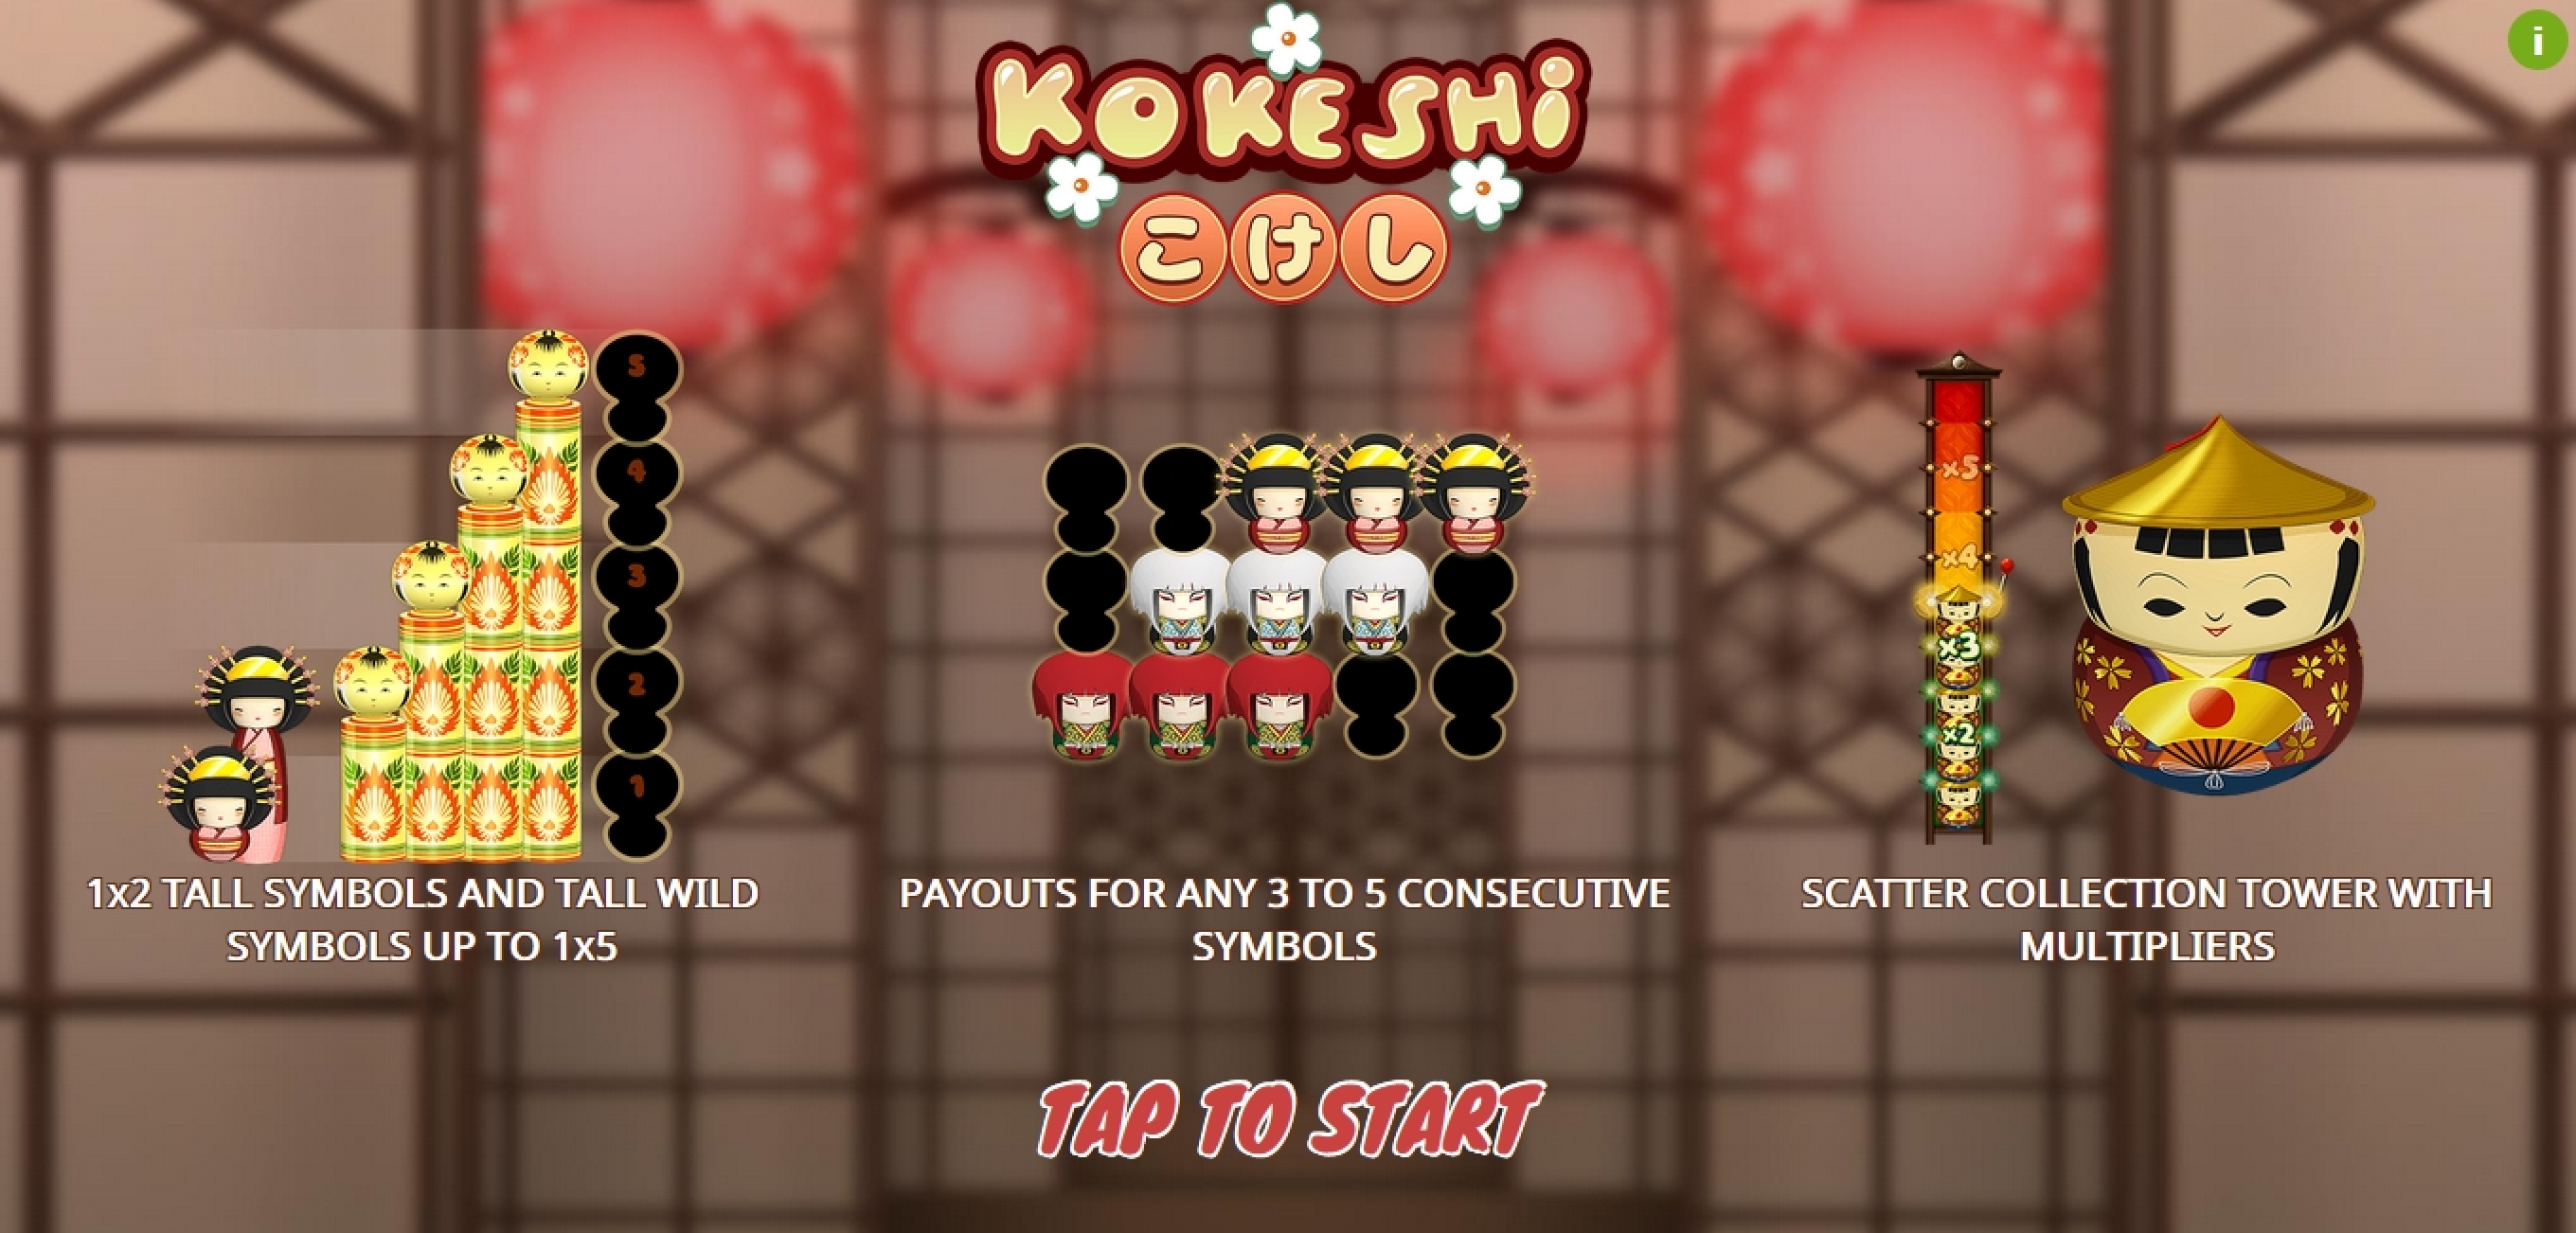 Play Kokeshi Free Casino Slot Game by Gamatron